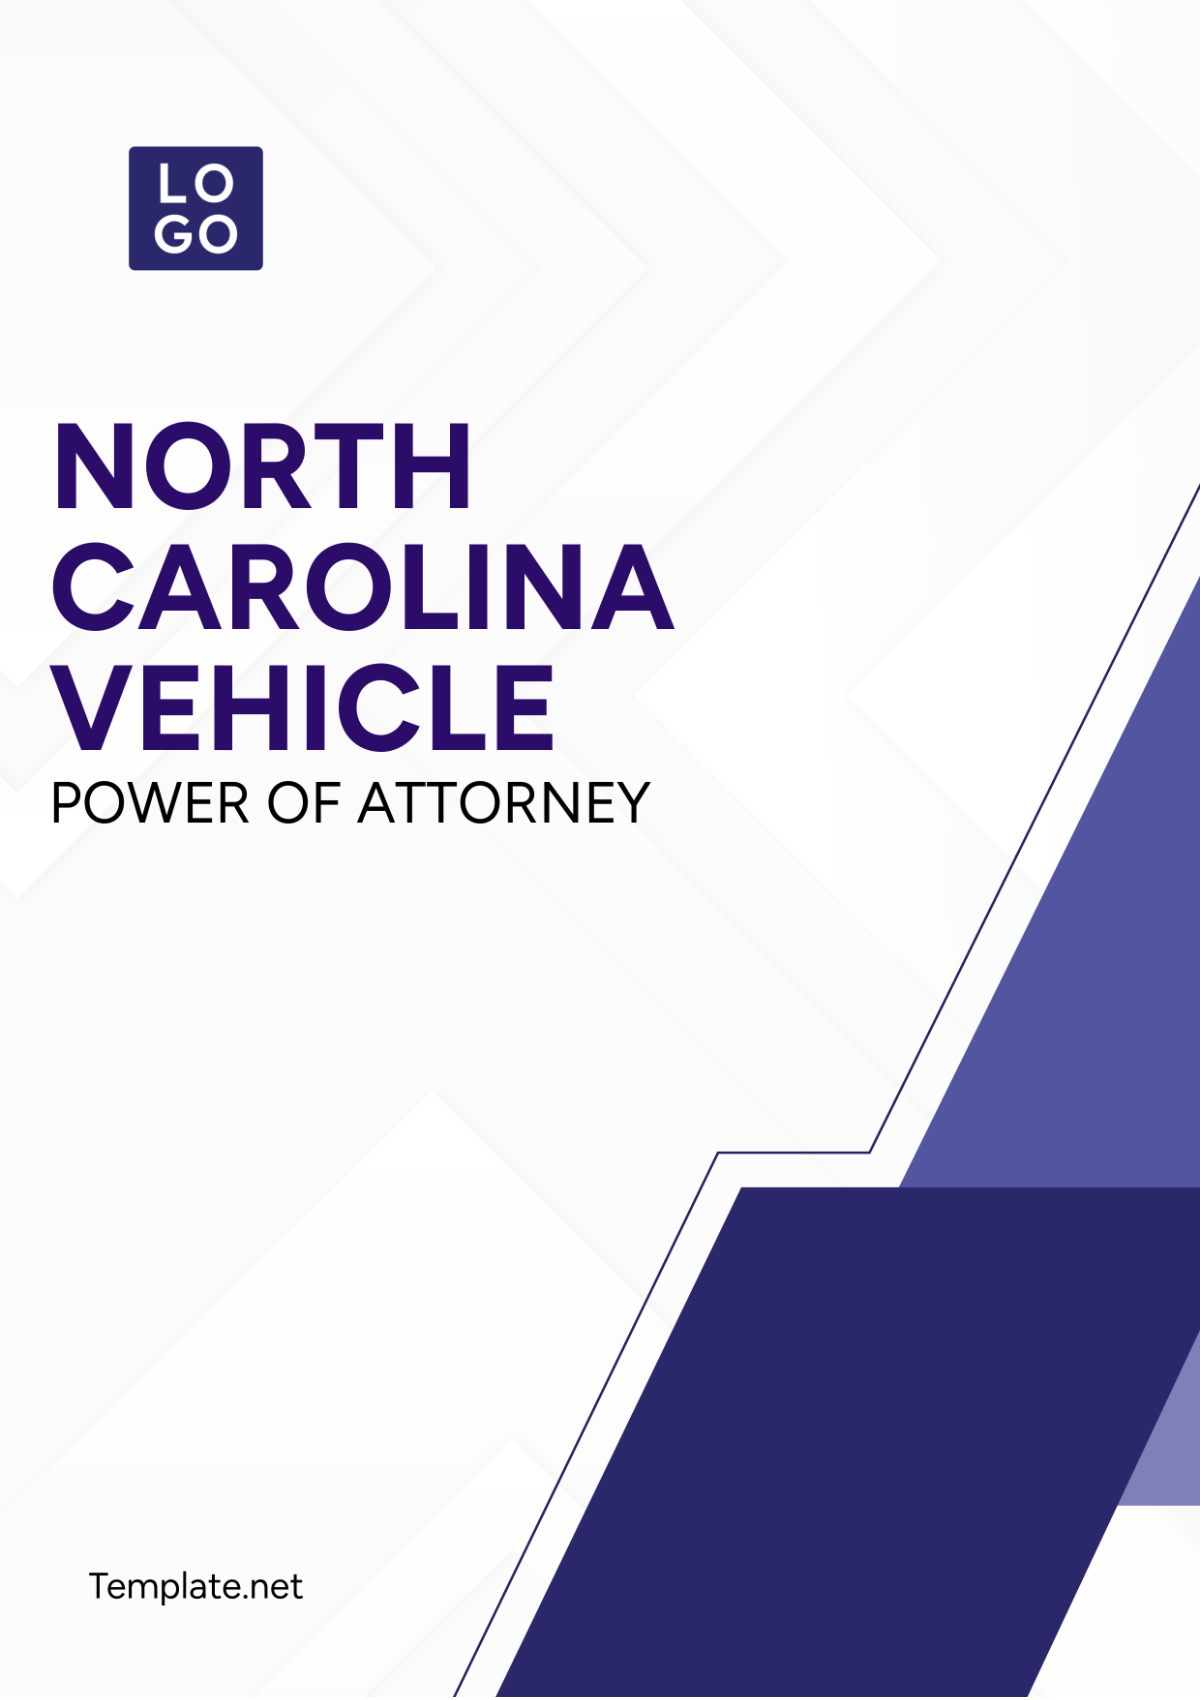 North Carolina Vehicle Power of Attorney Template